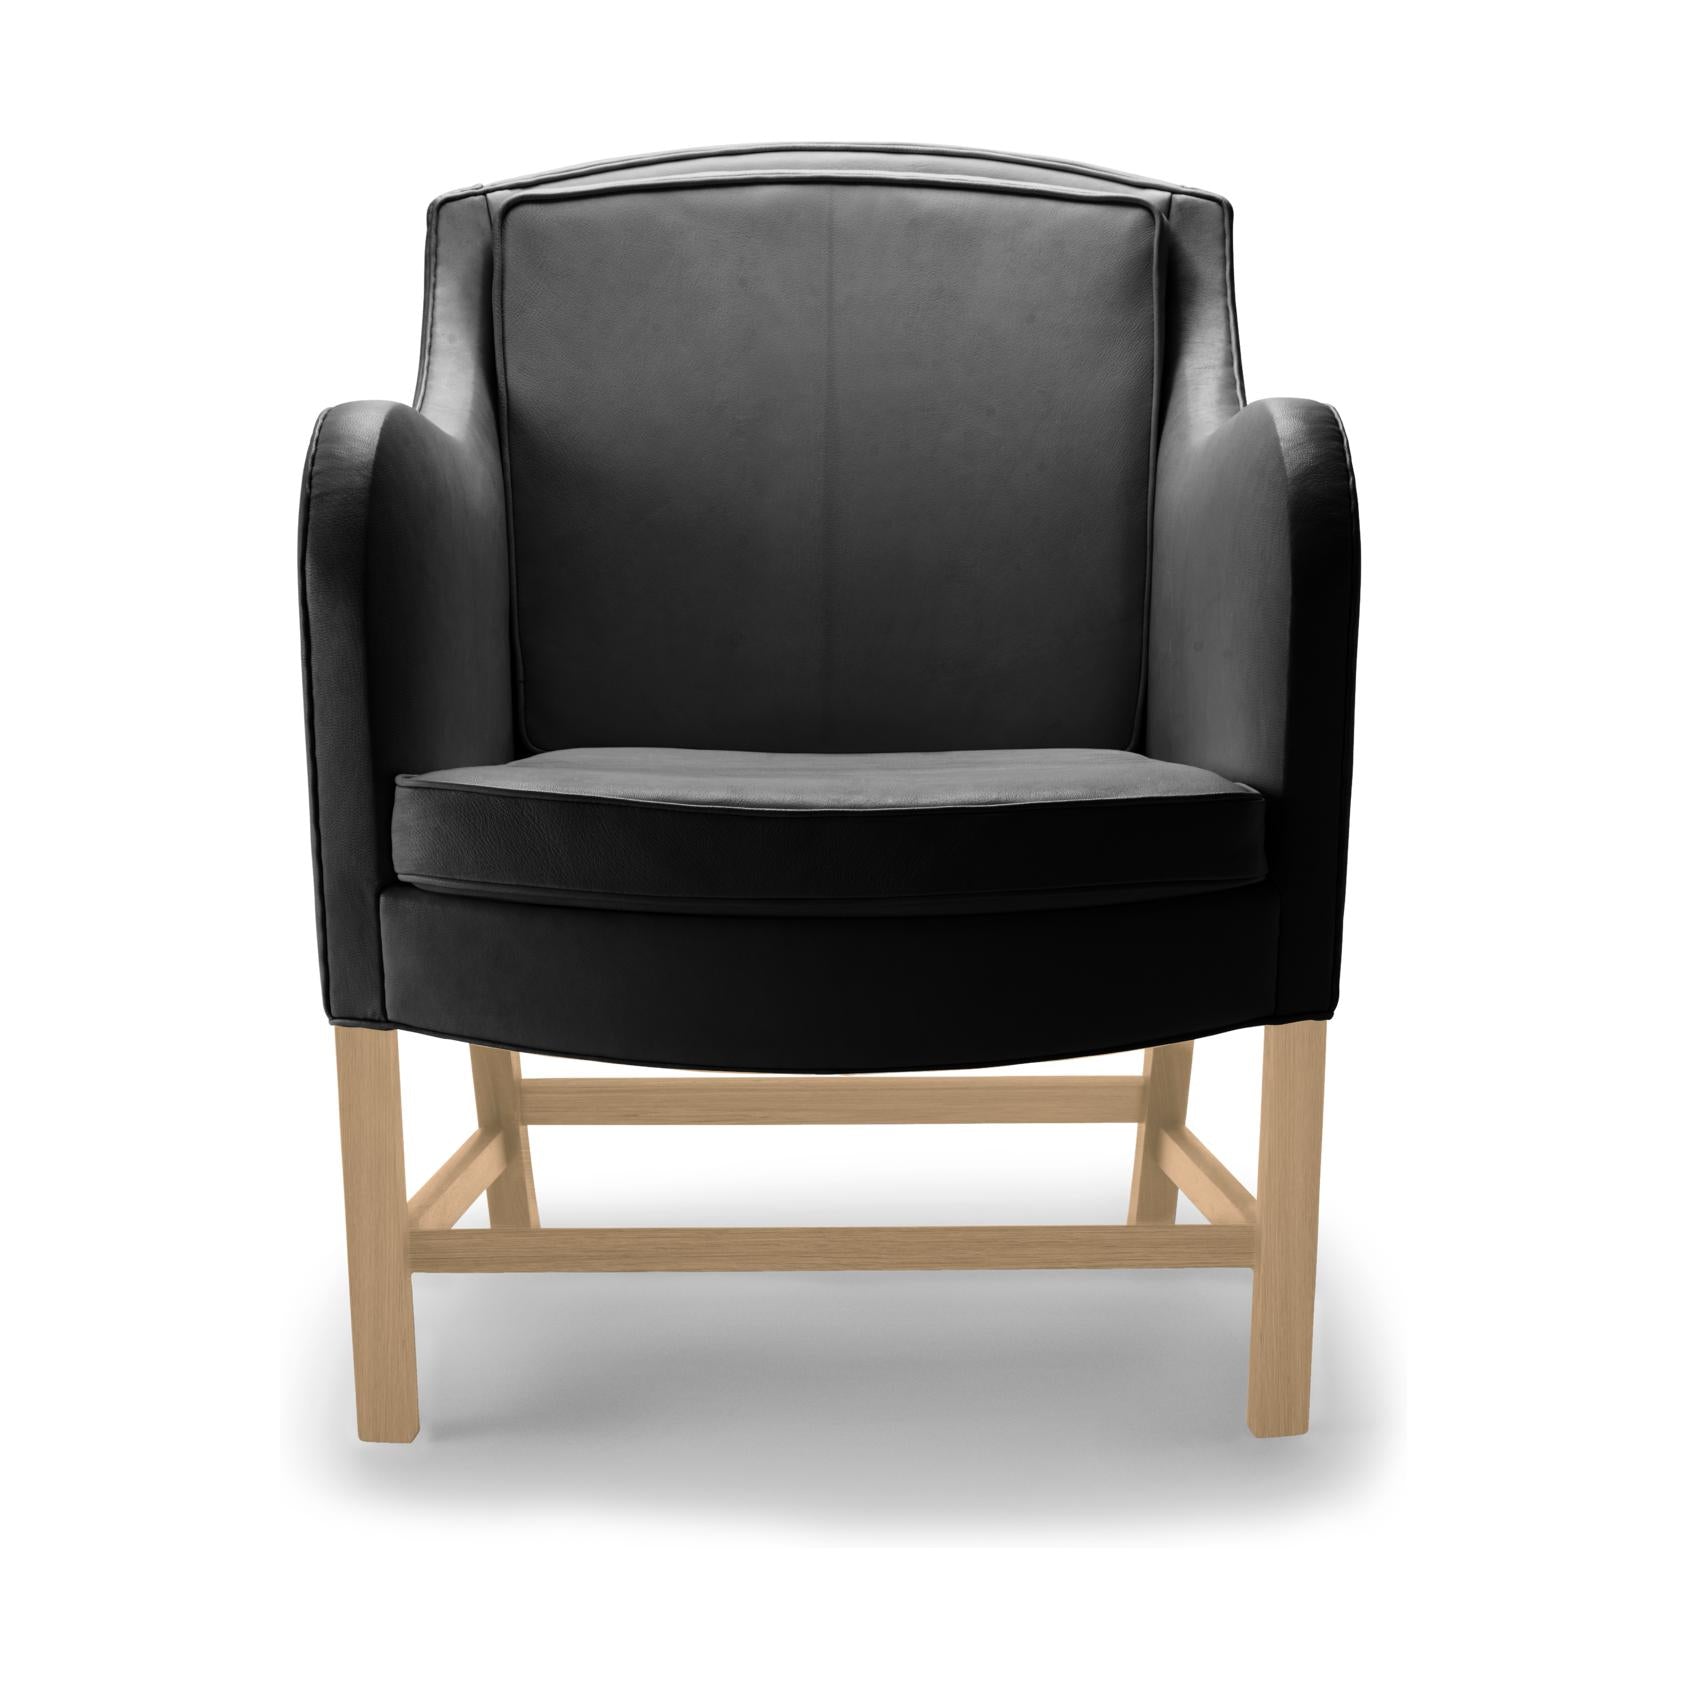 Carl Hansen KK43960 Mieszanka krzesełka, naoliwiona dębowa/czarna skóra